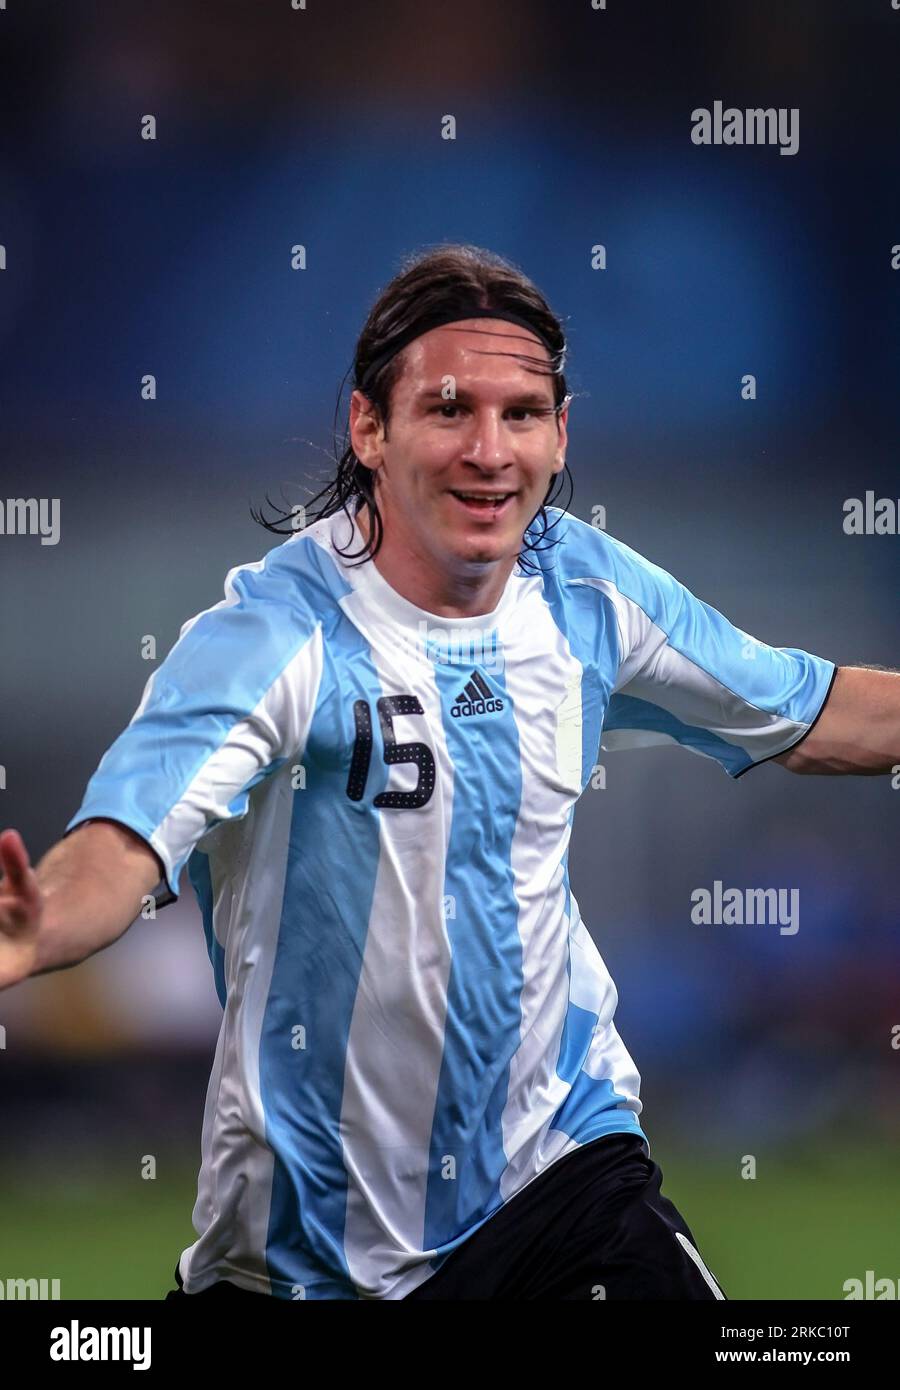 Argentina's top goal scorers' jerseys